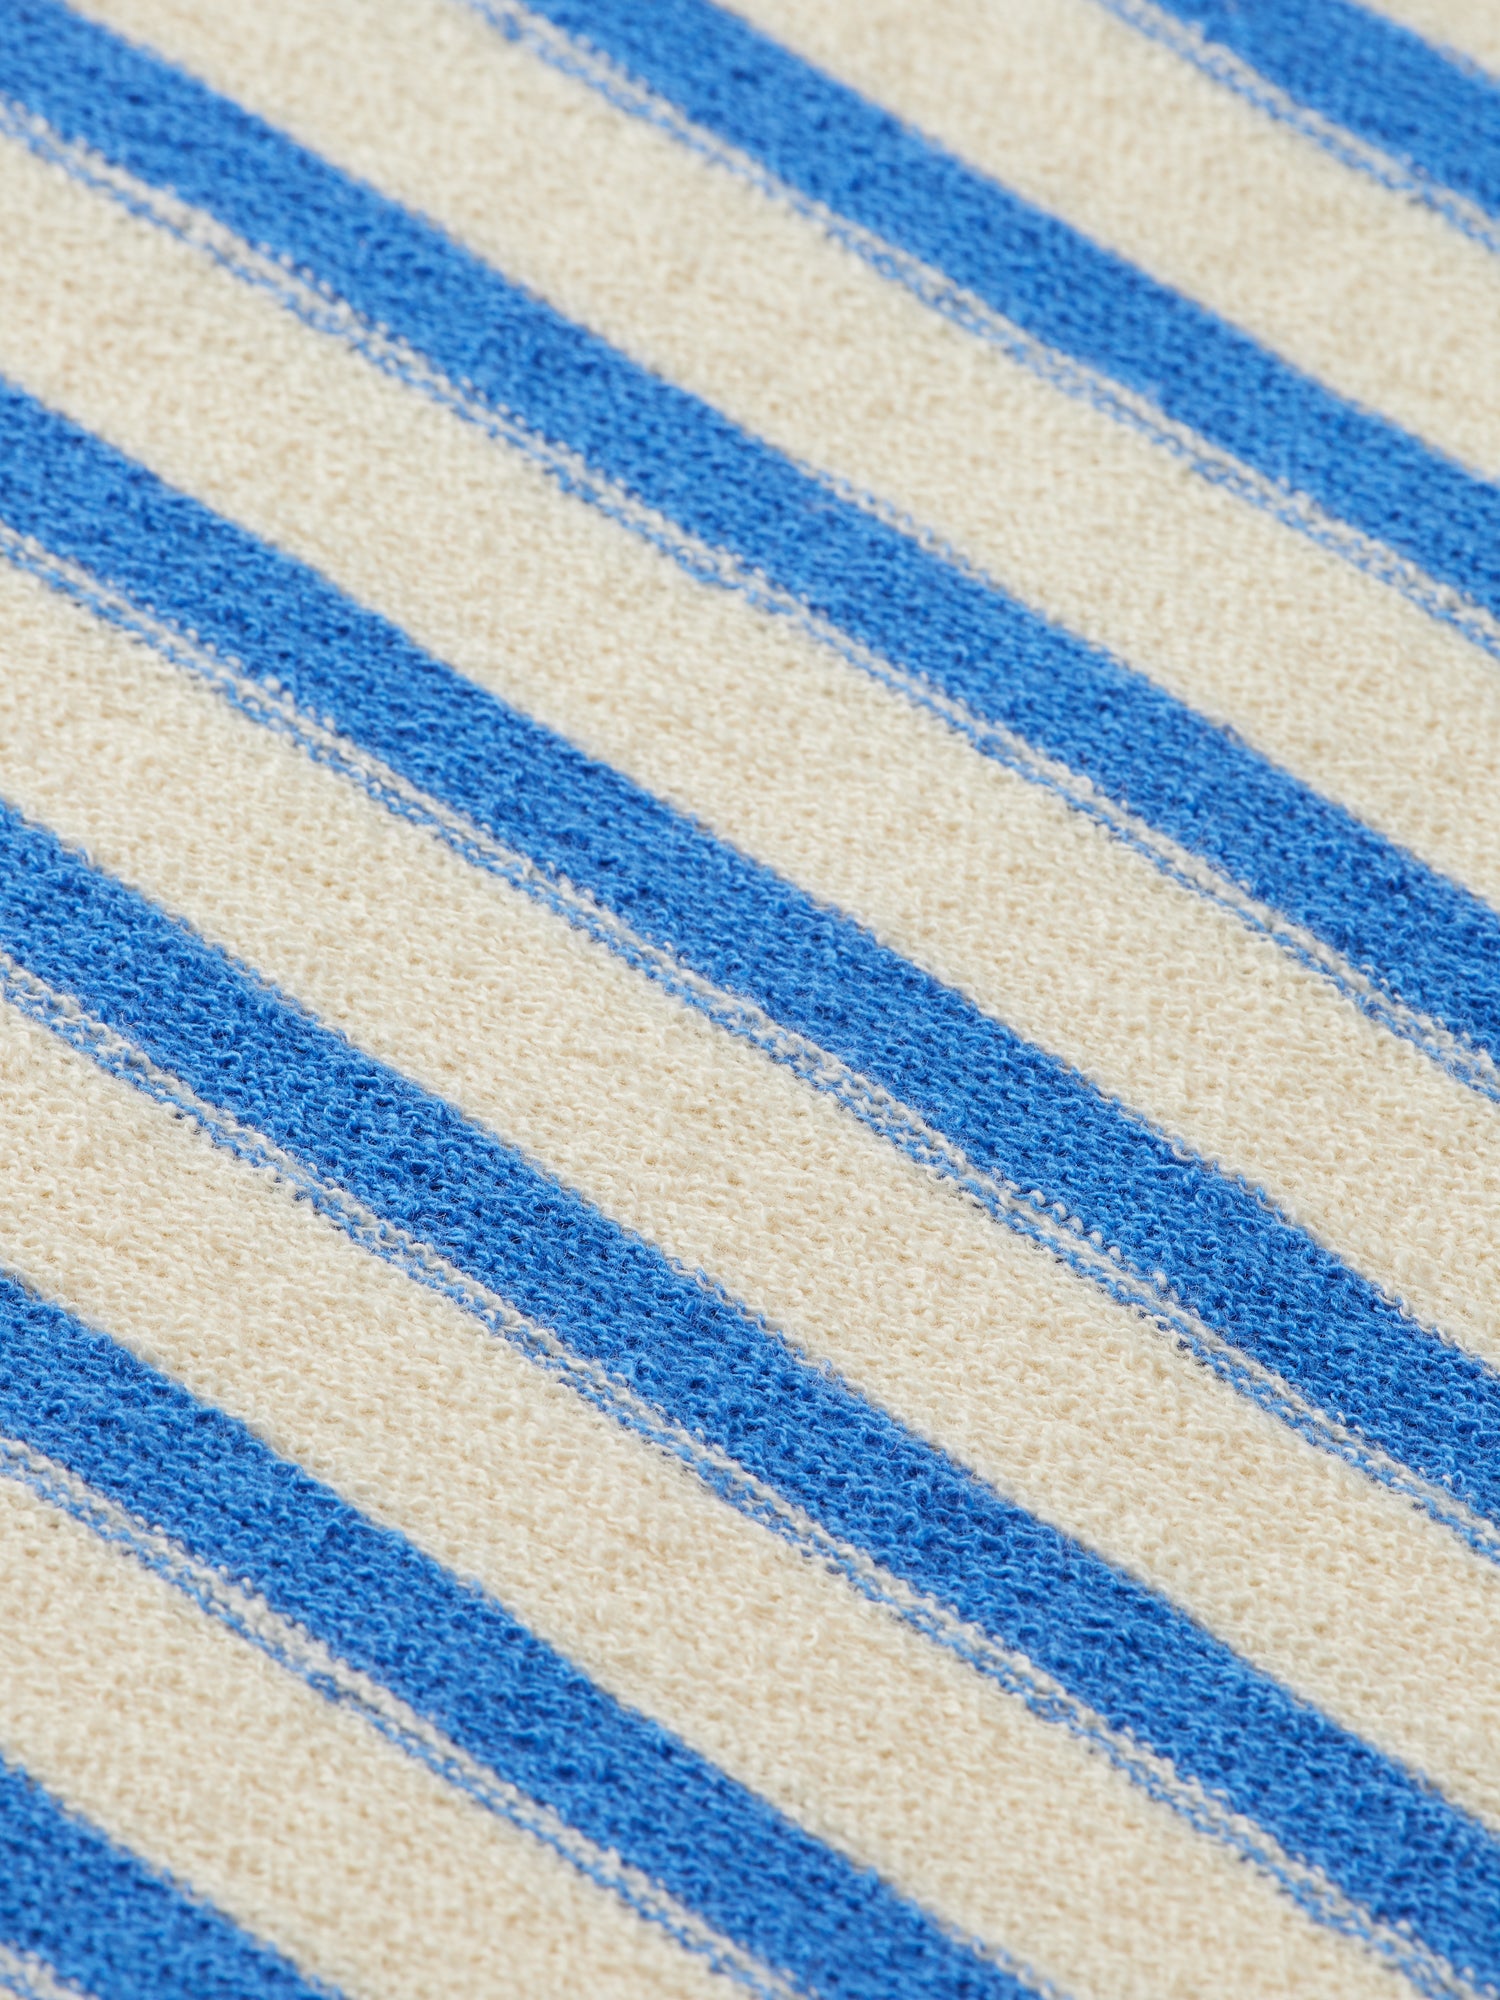 Relaxed-fit striped t-shirt - Ecru Blue Stripe